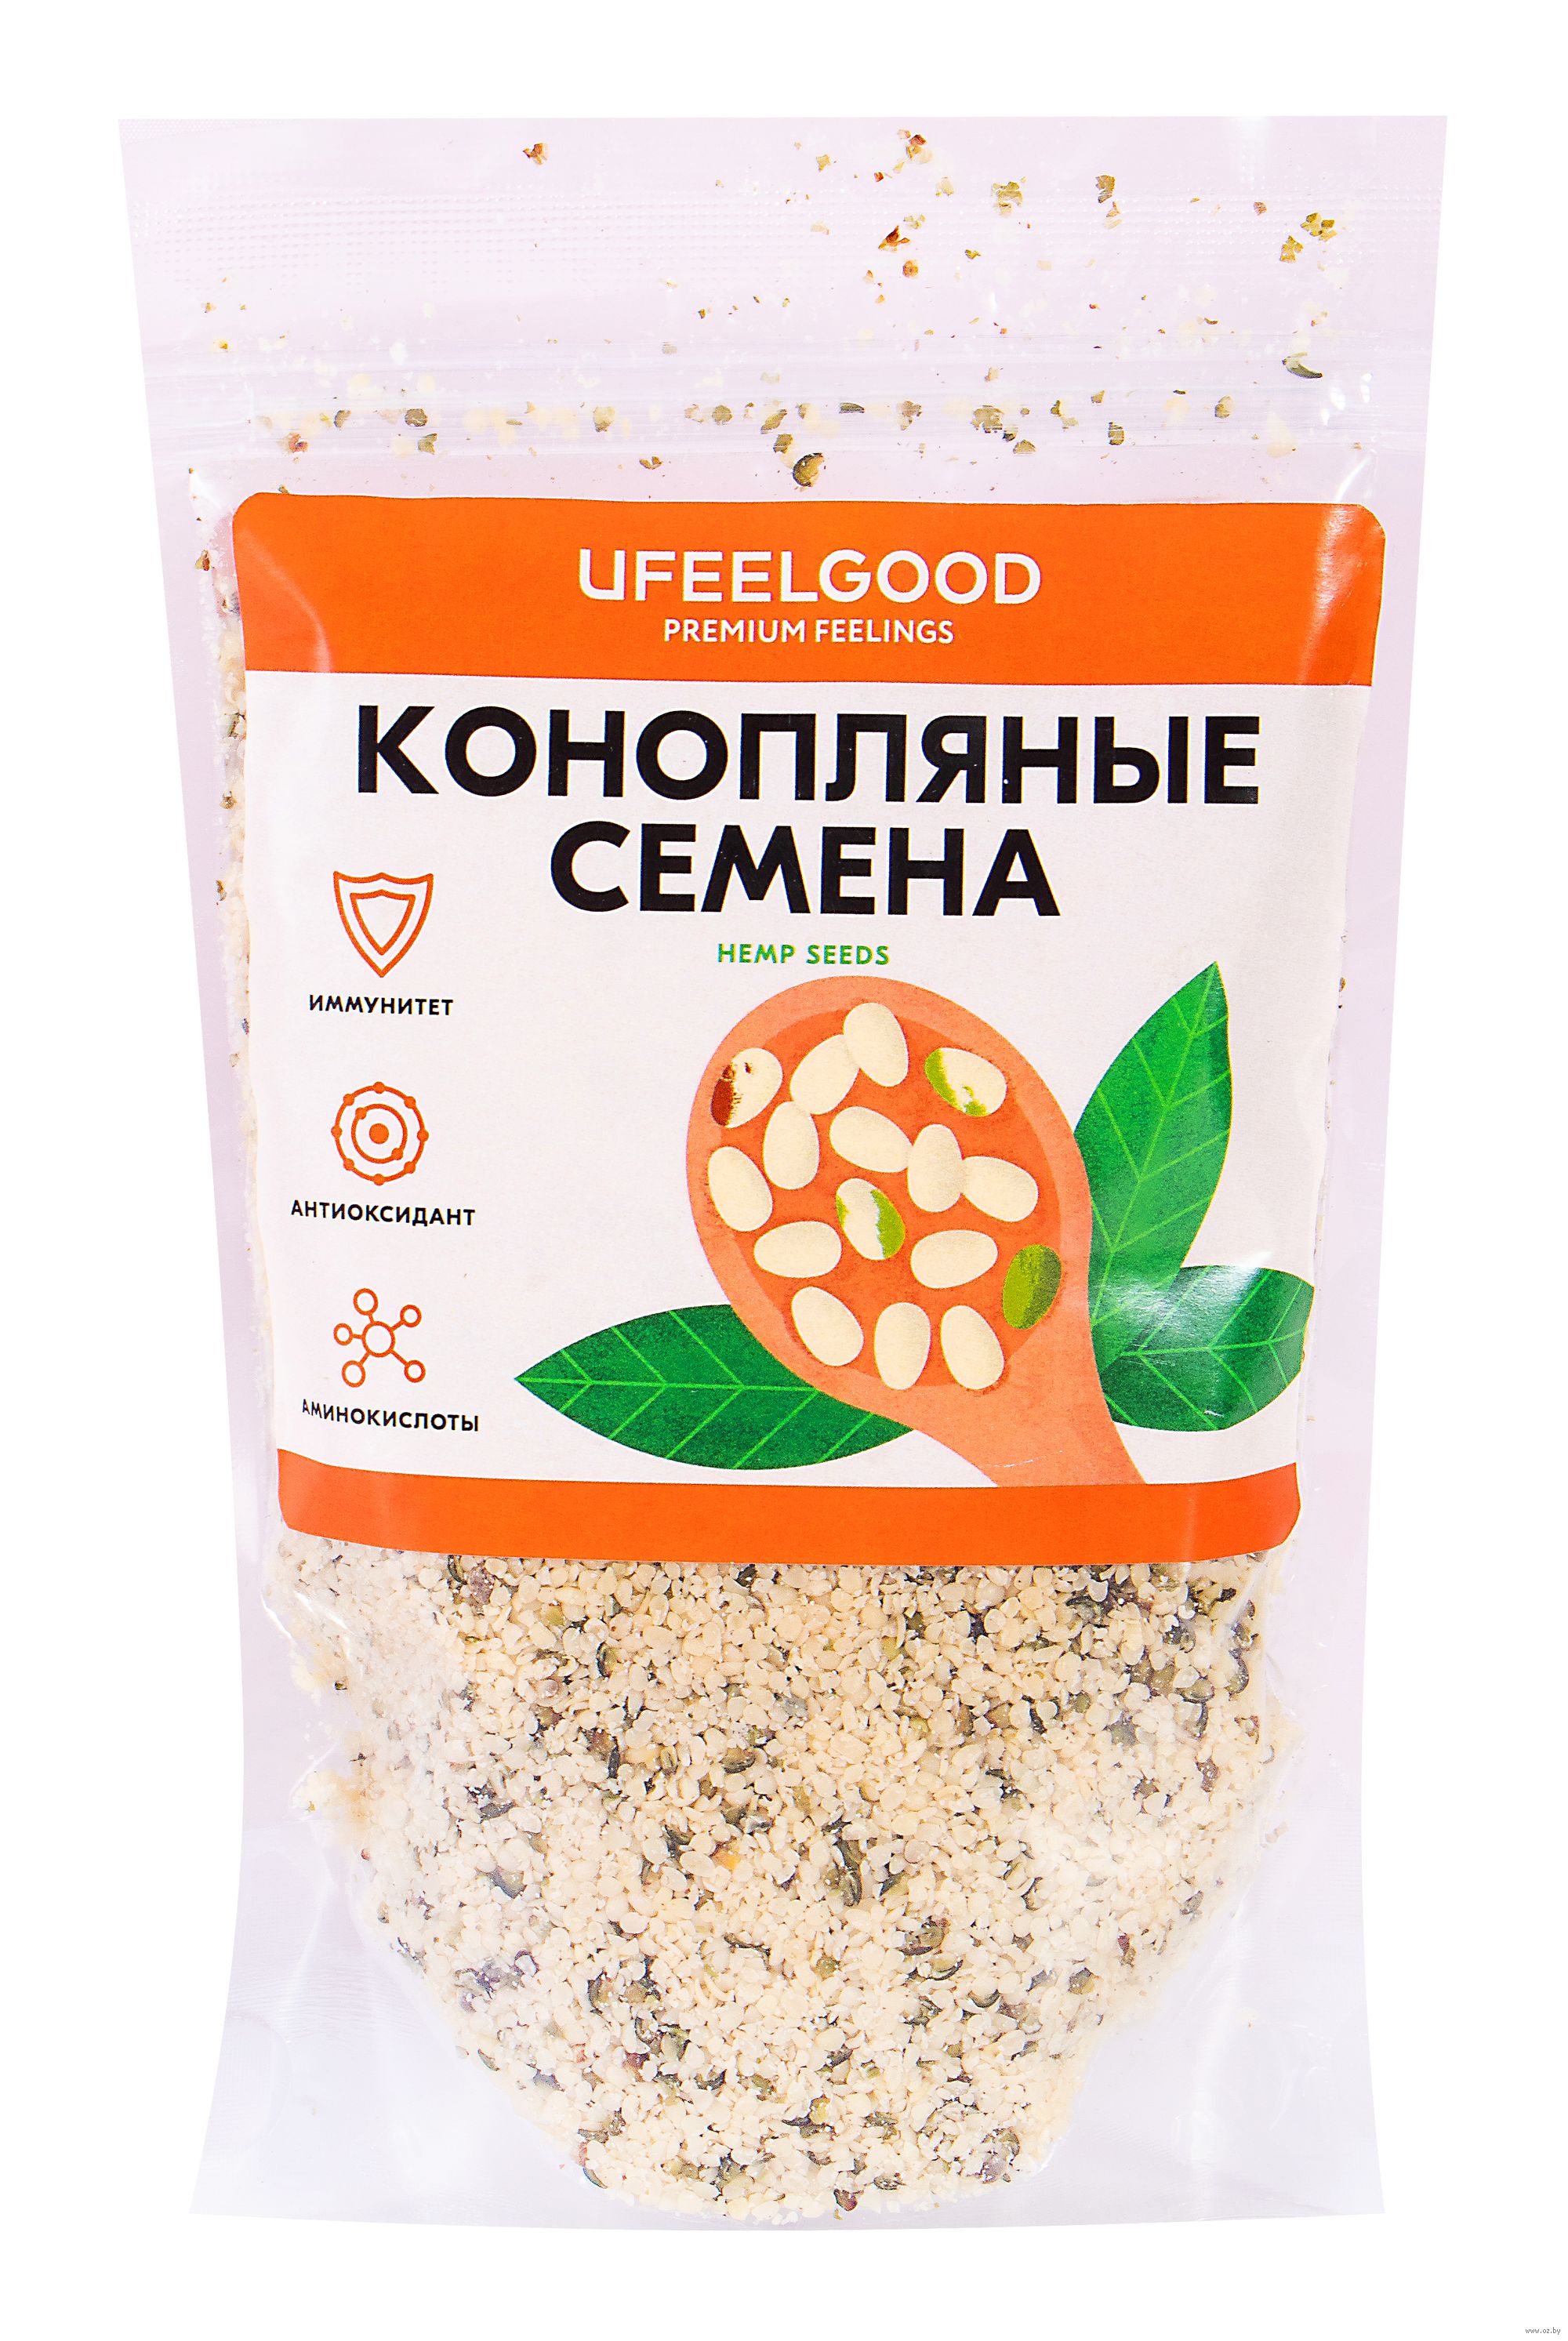 Купить в беларуси семена конопли конопля хакасии